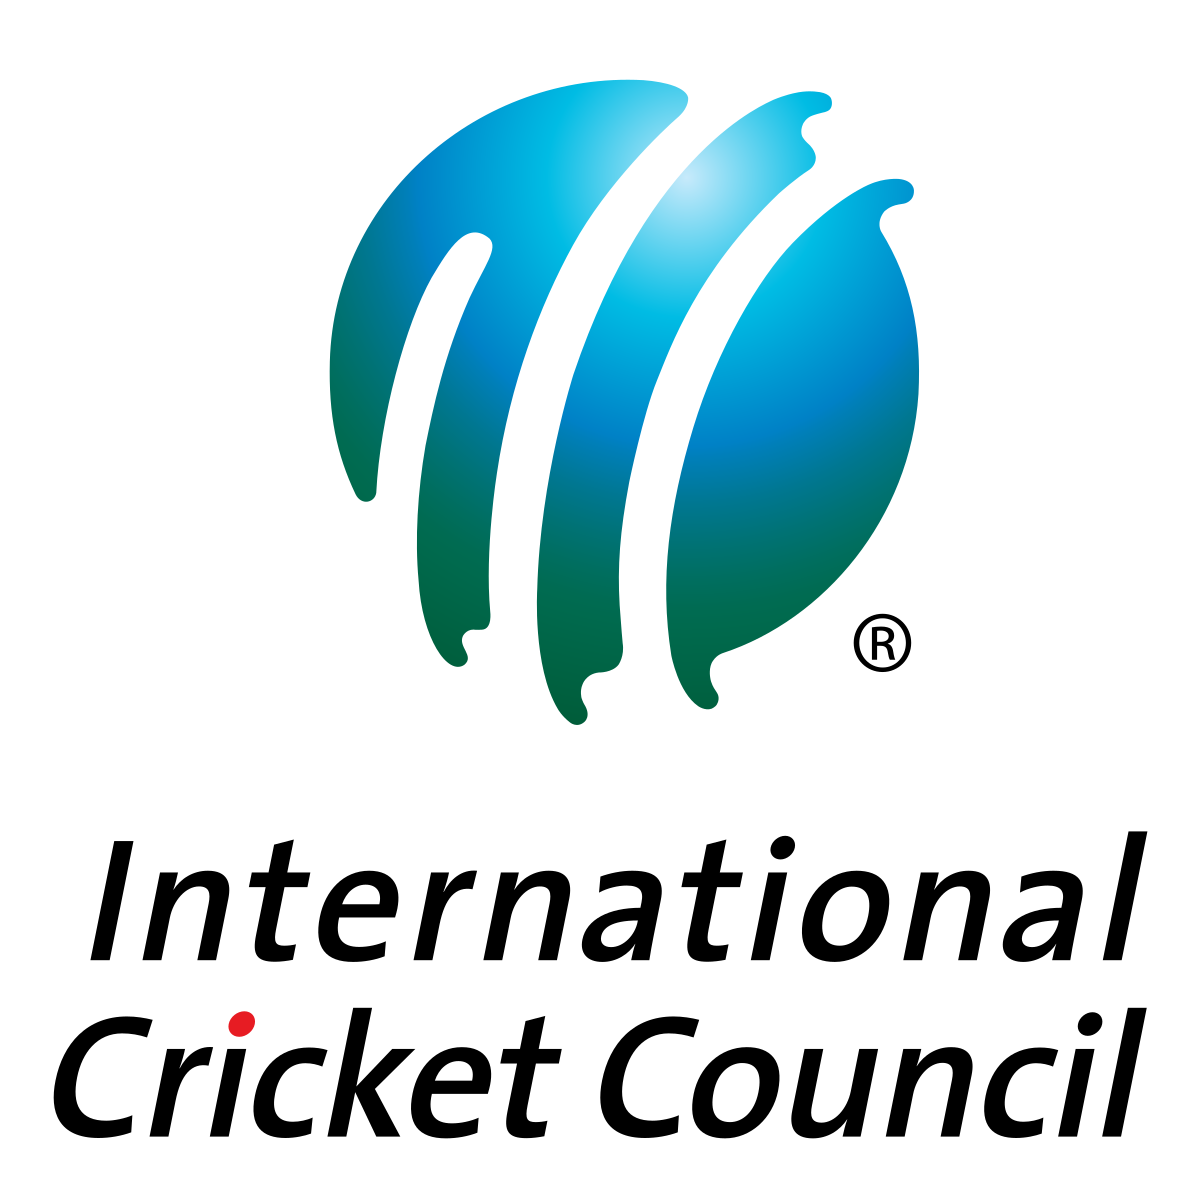 (2021) International Cricket